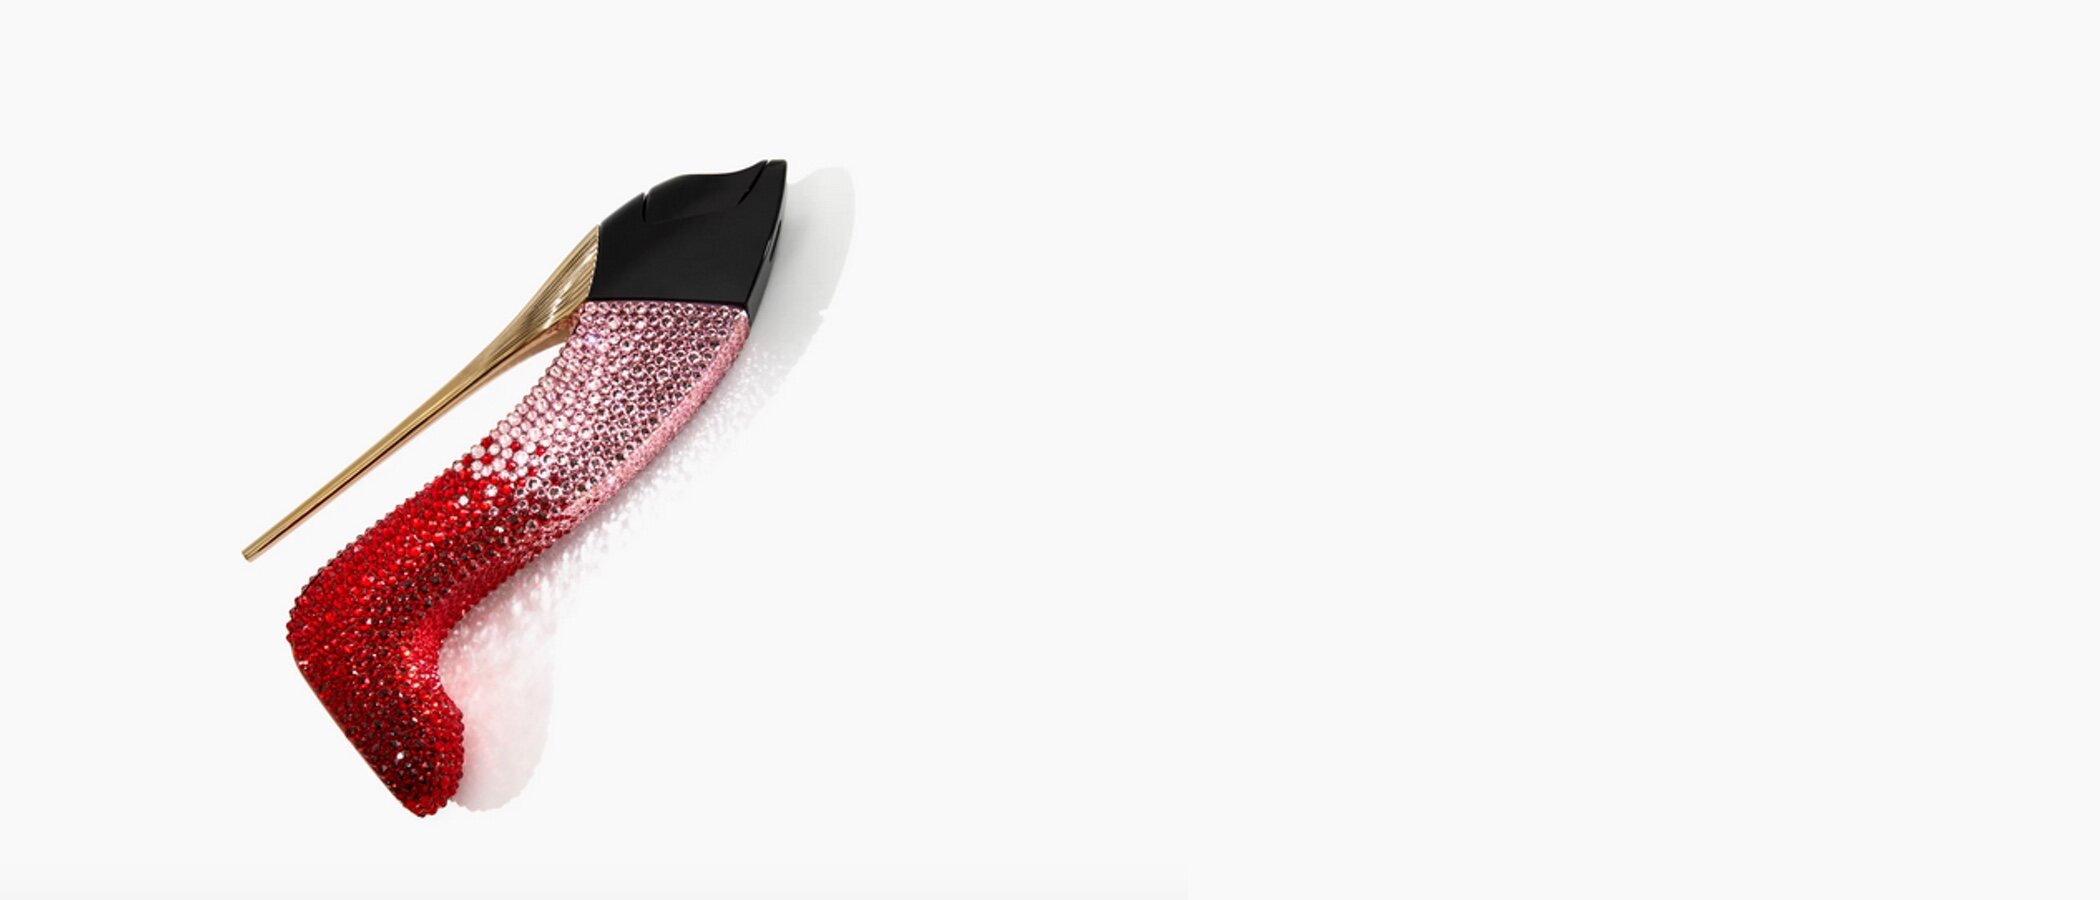 Carolina Herrera lanza 'Good Girl Ruby Sparkle' con cristales de Swarovski